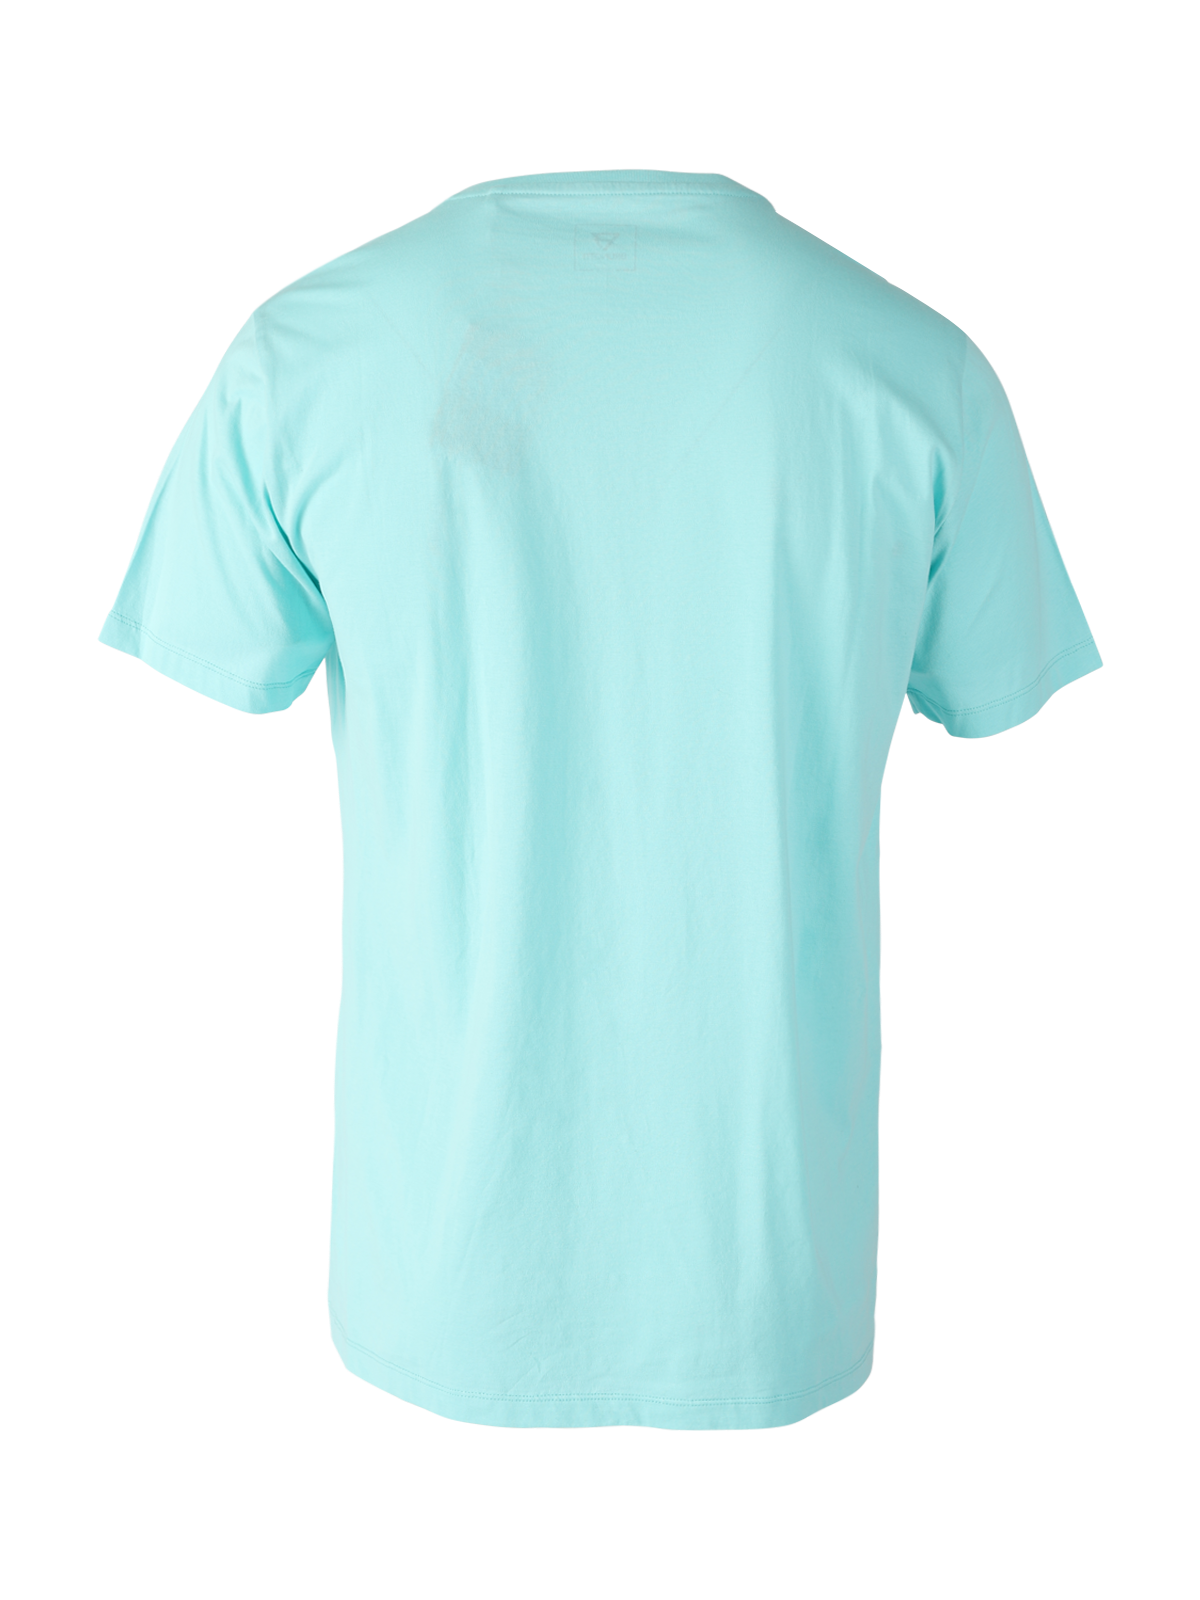 Naval-R Herren T-Shirt | Blau